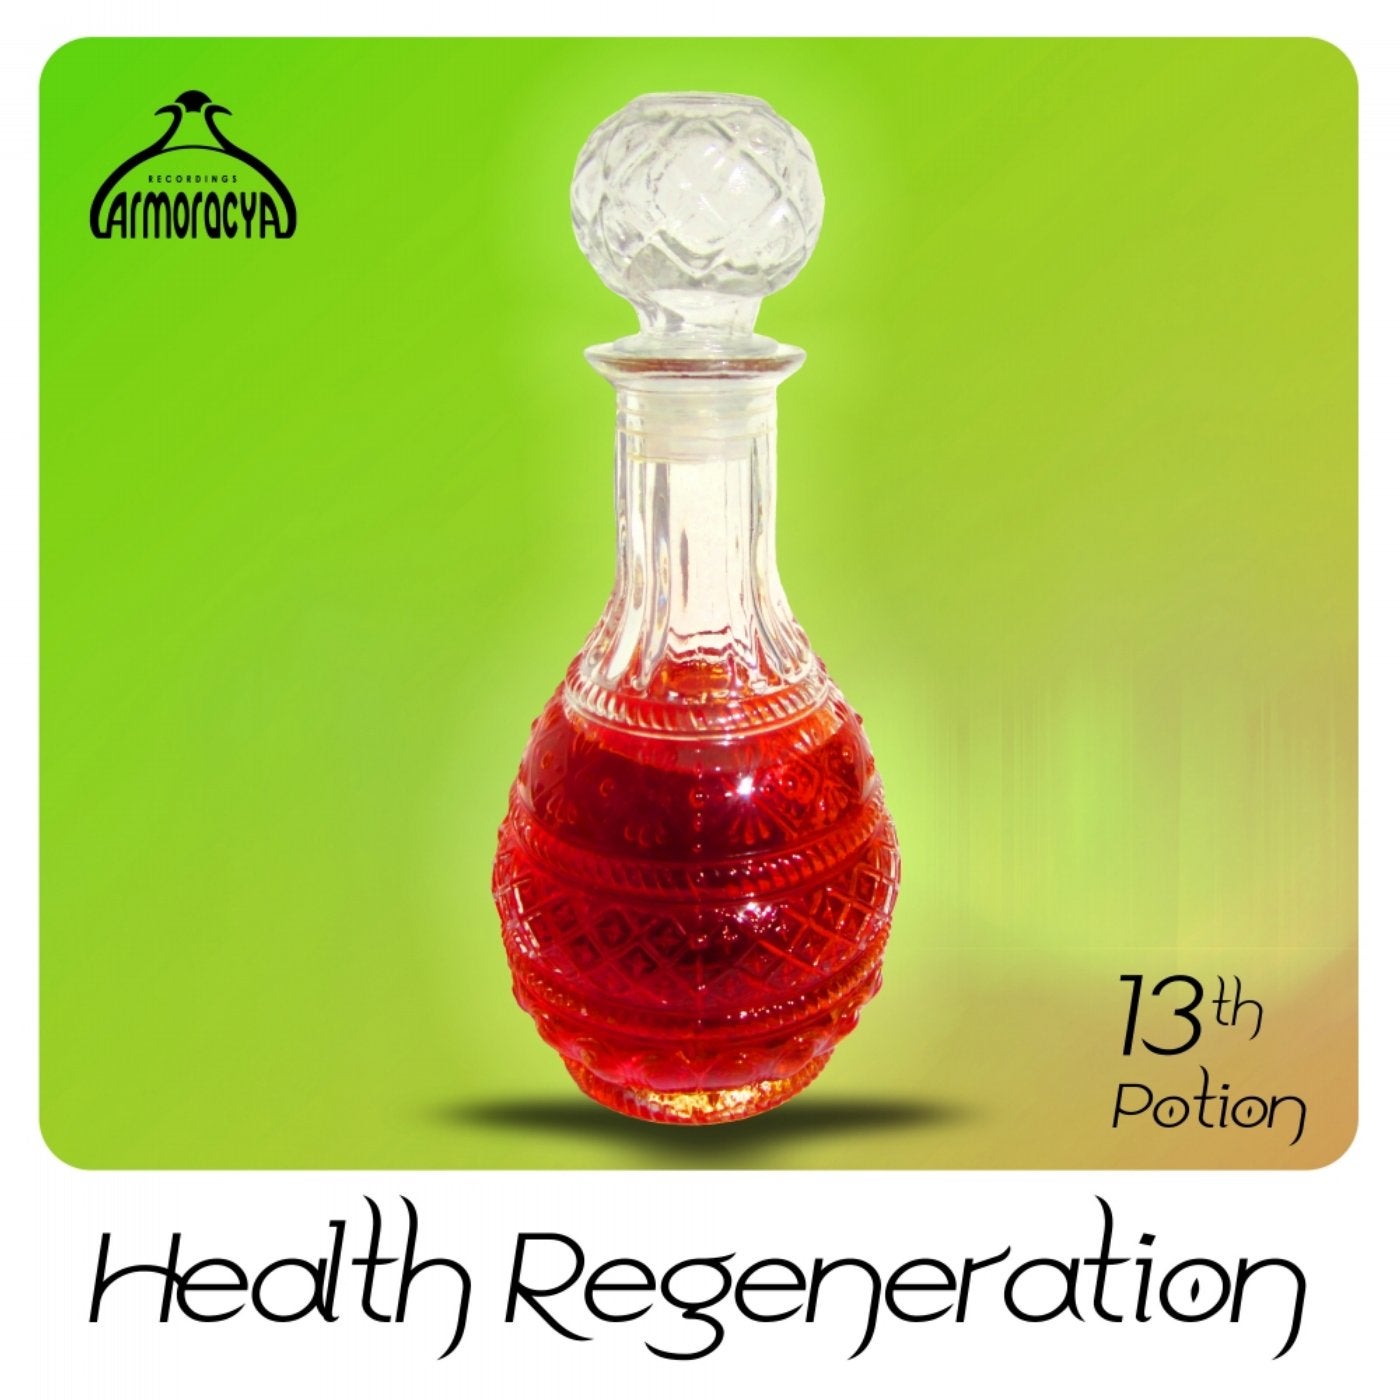 Health Regeneration 13th Potion